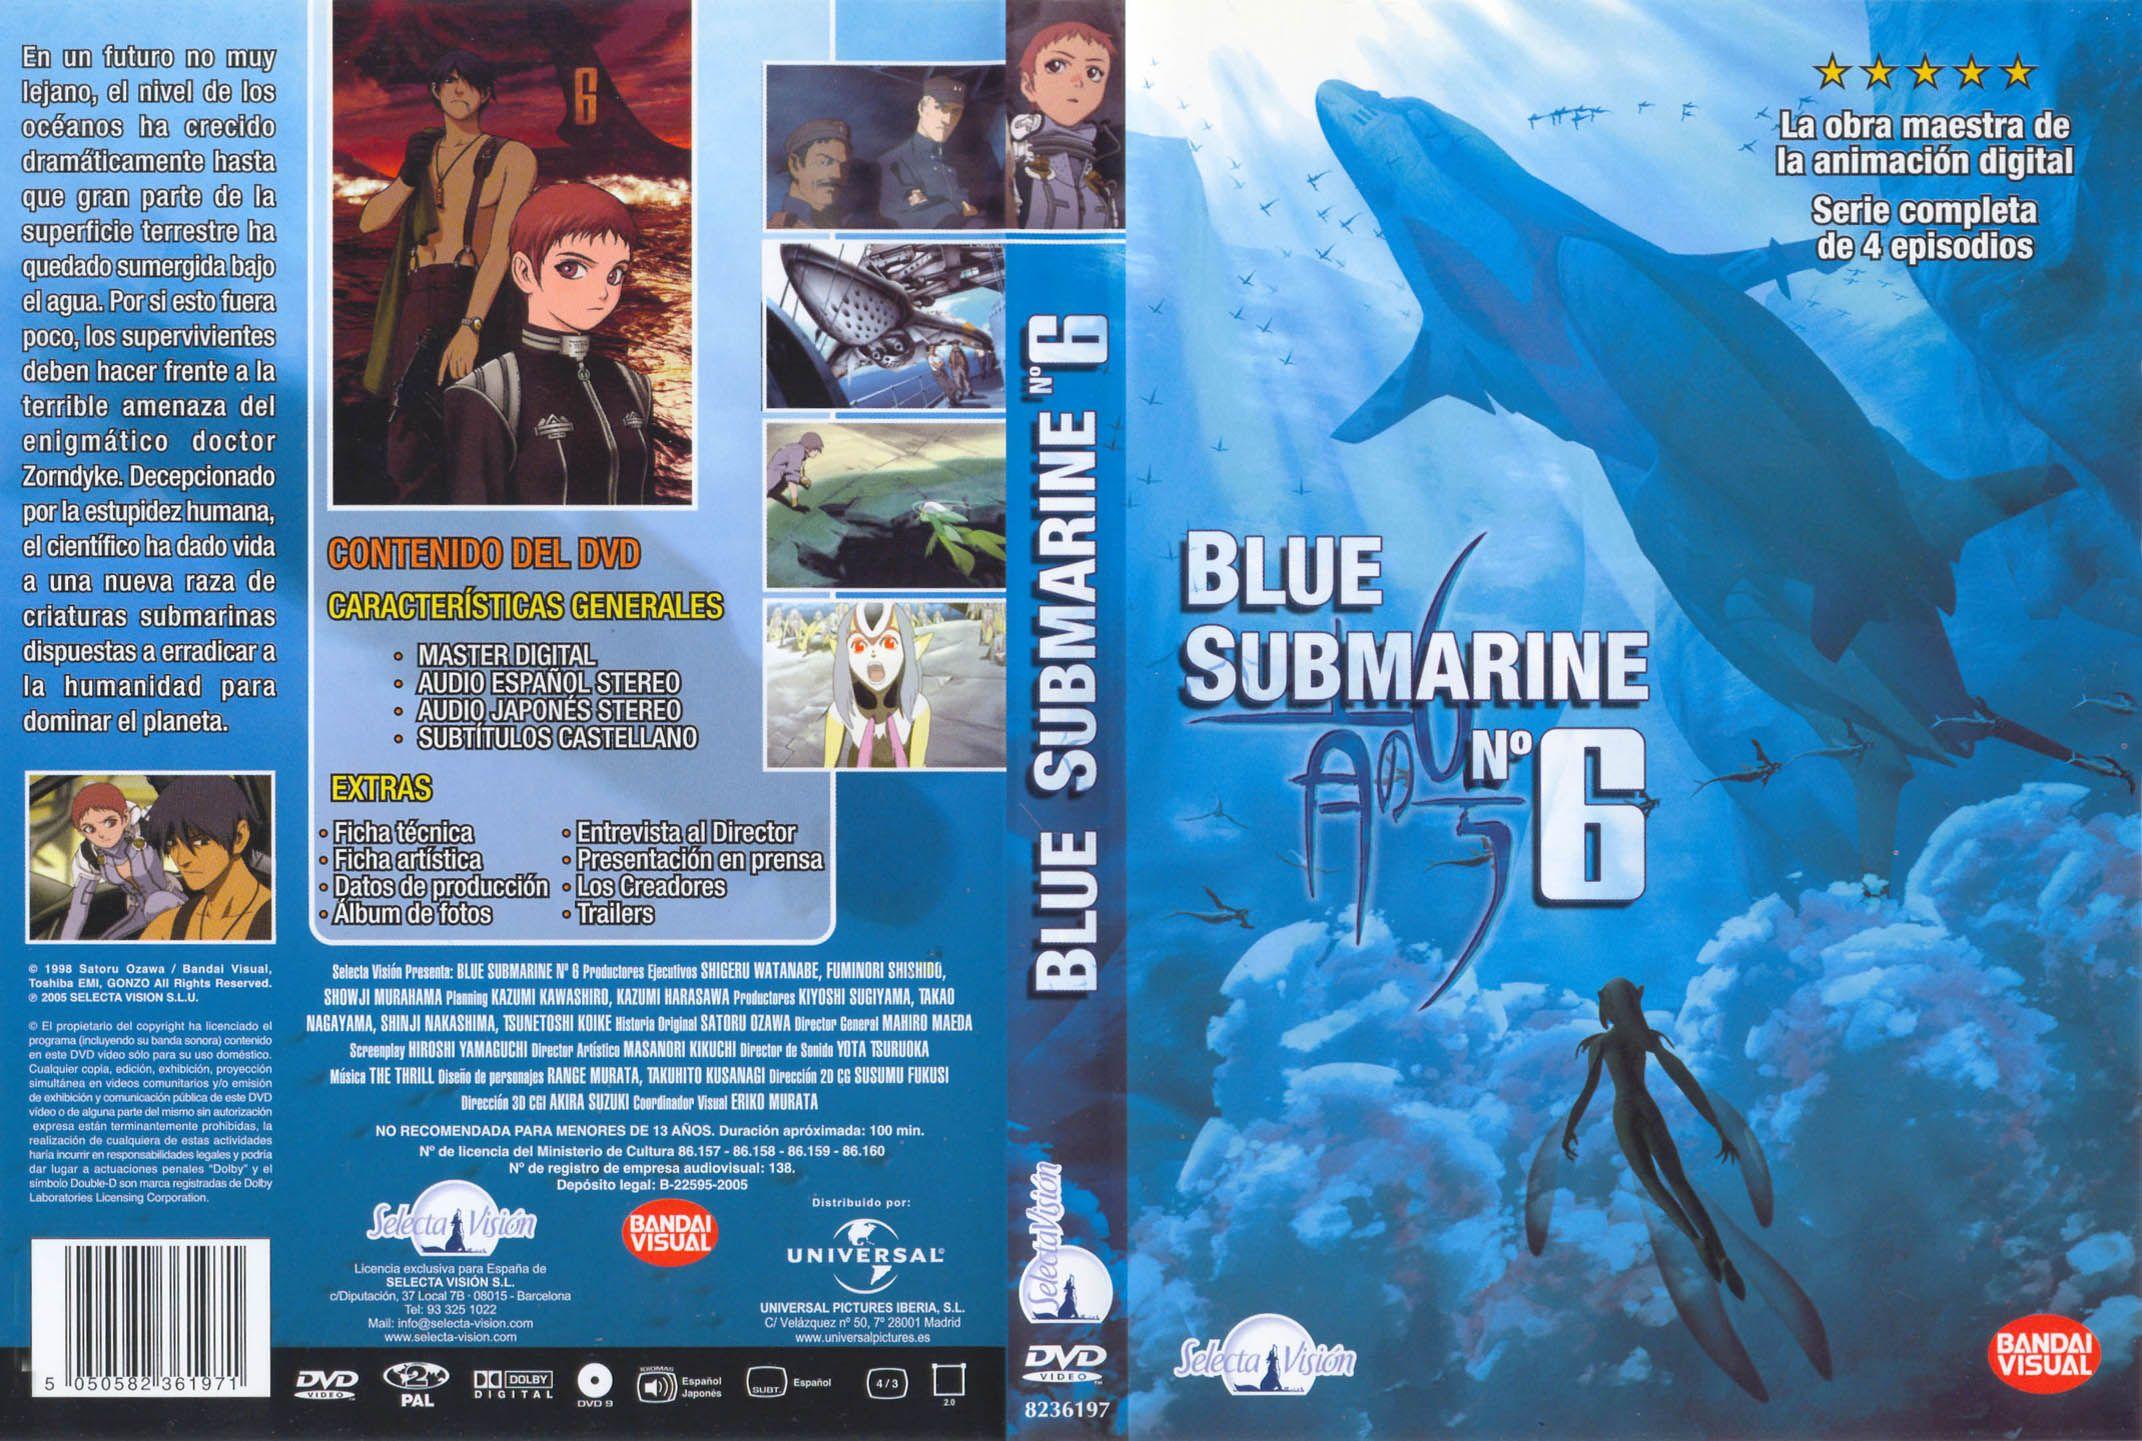 Blue Submarine No.6 HD wallpapers, Desktop wallpaper - most viewed